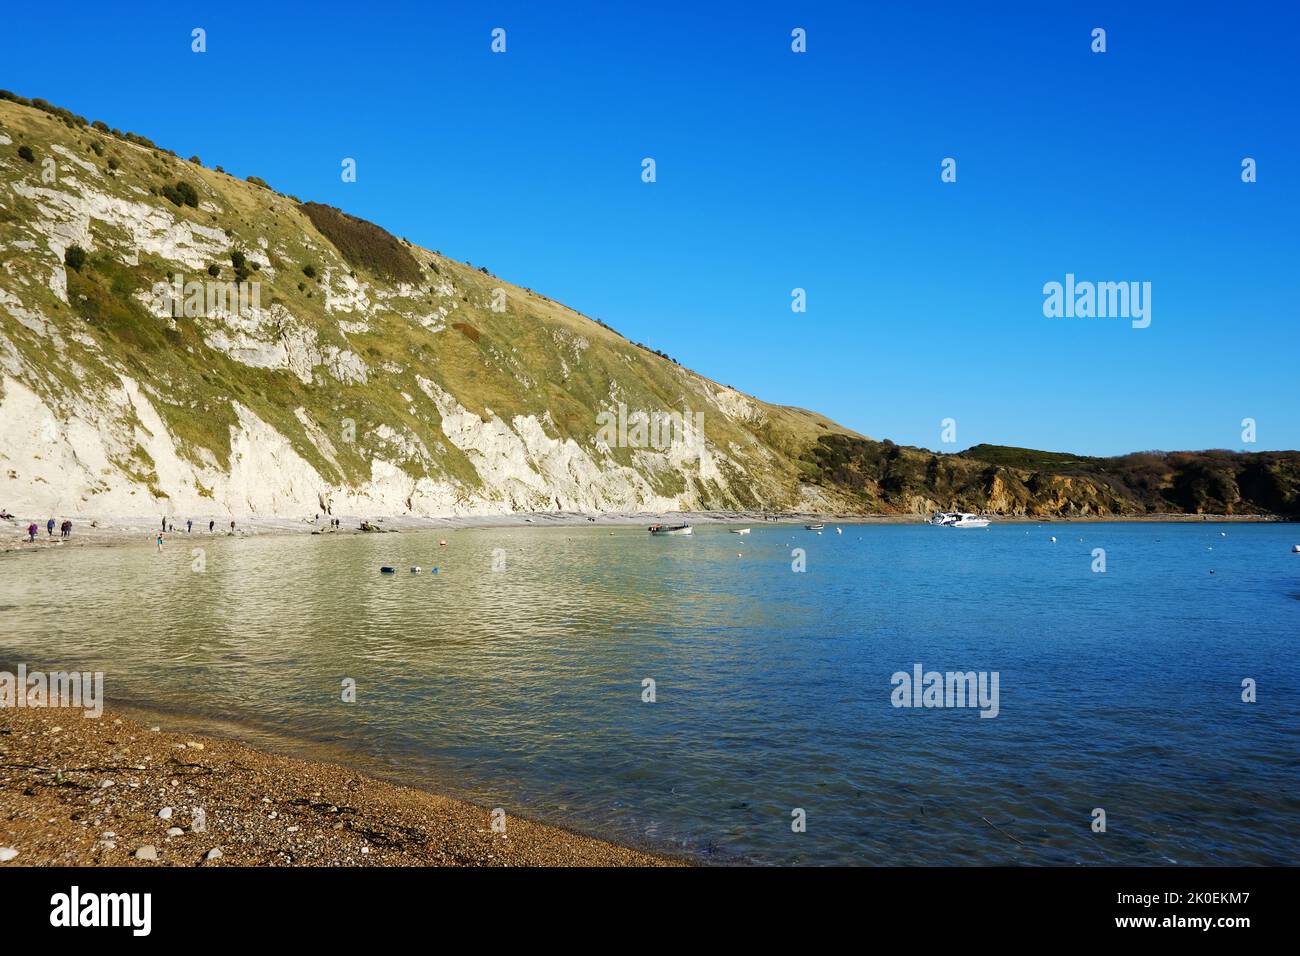 Lulworth Cove, Dorset, UK - John Gollop Stock Photo